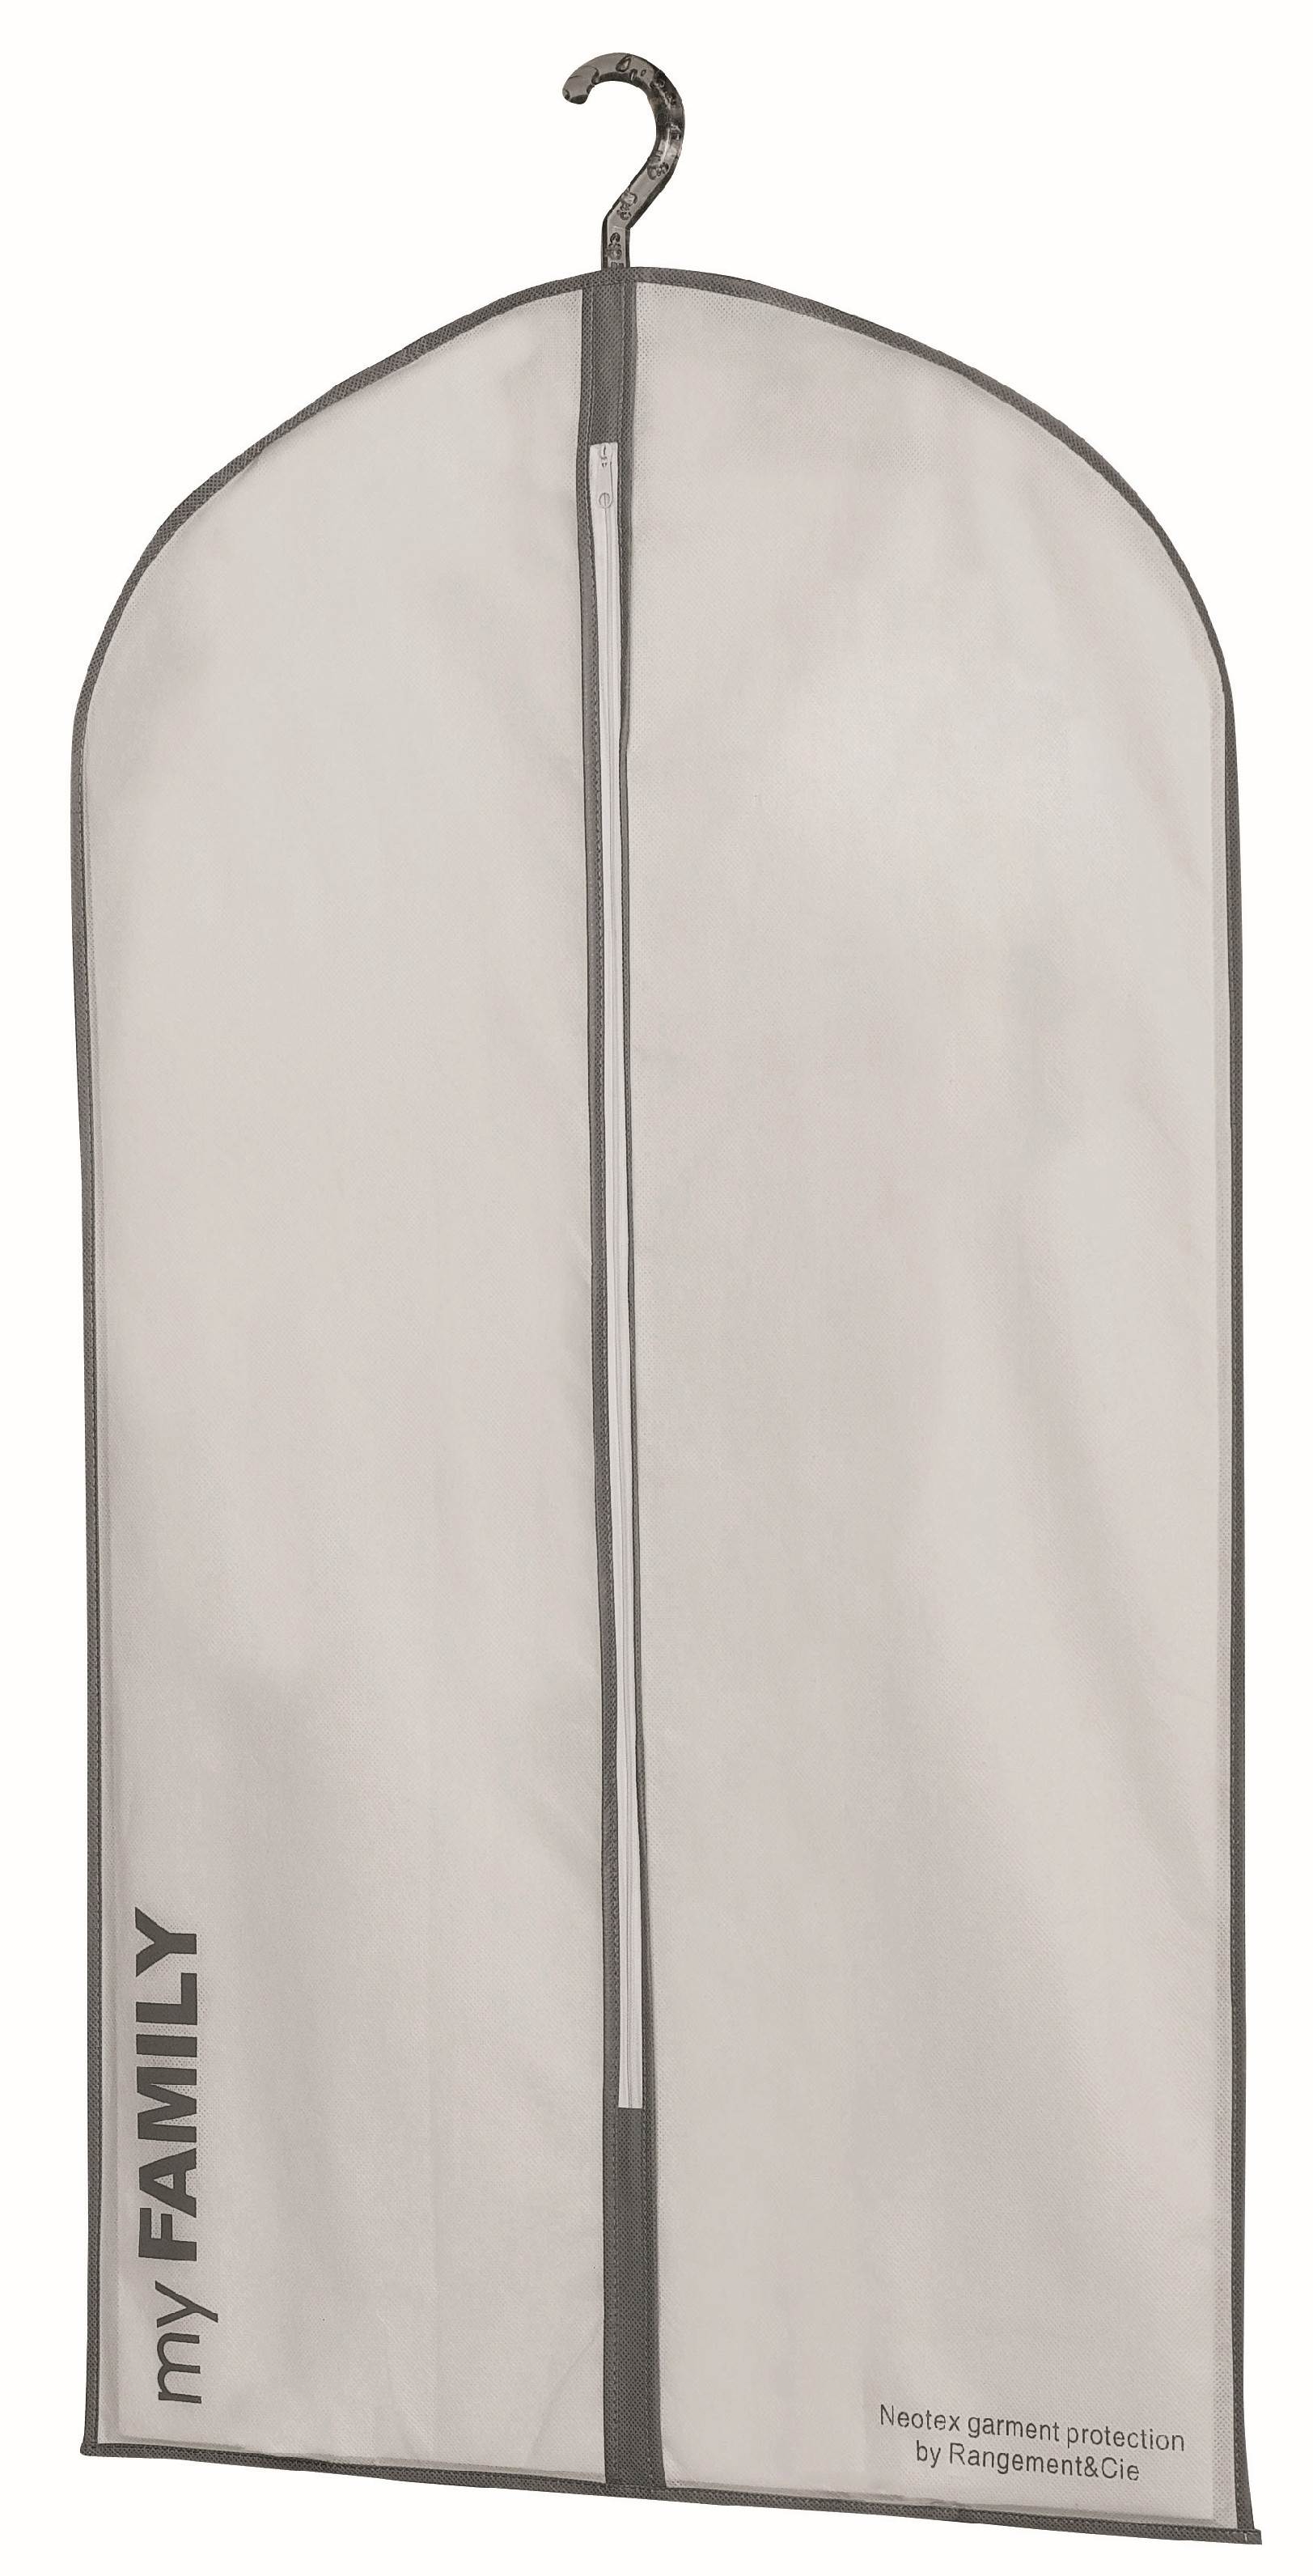 Obal na oblek a krátké šaty Compactor Life 60 x 100 cm, bílý polypropylén